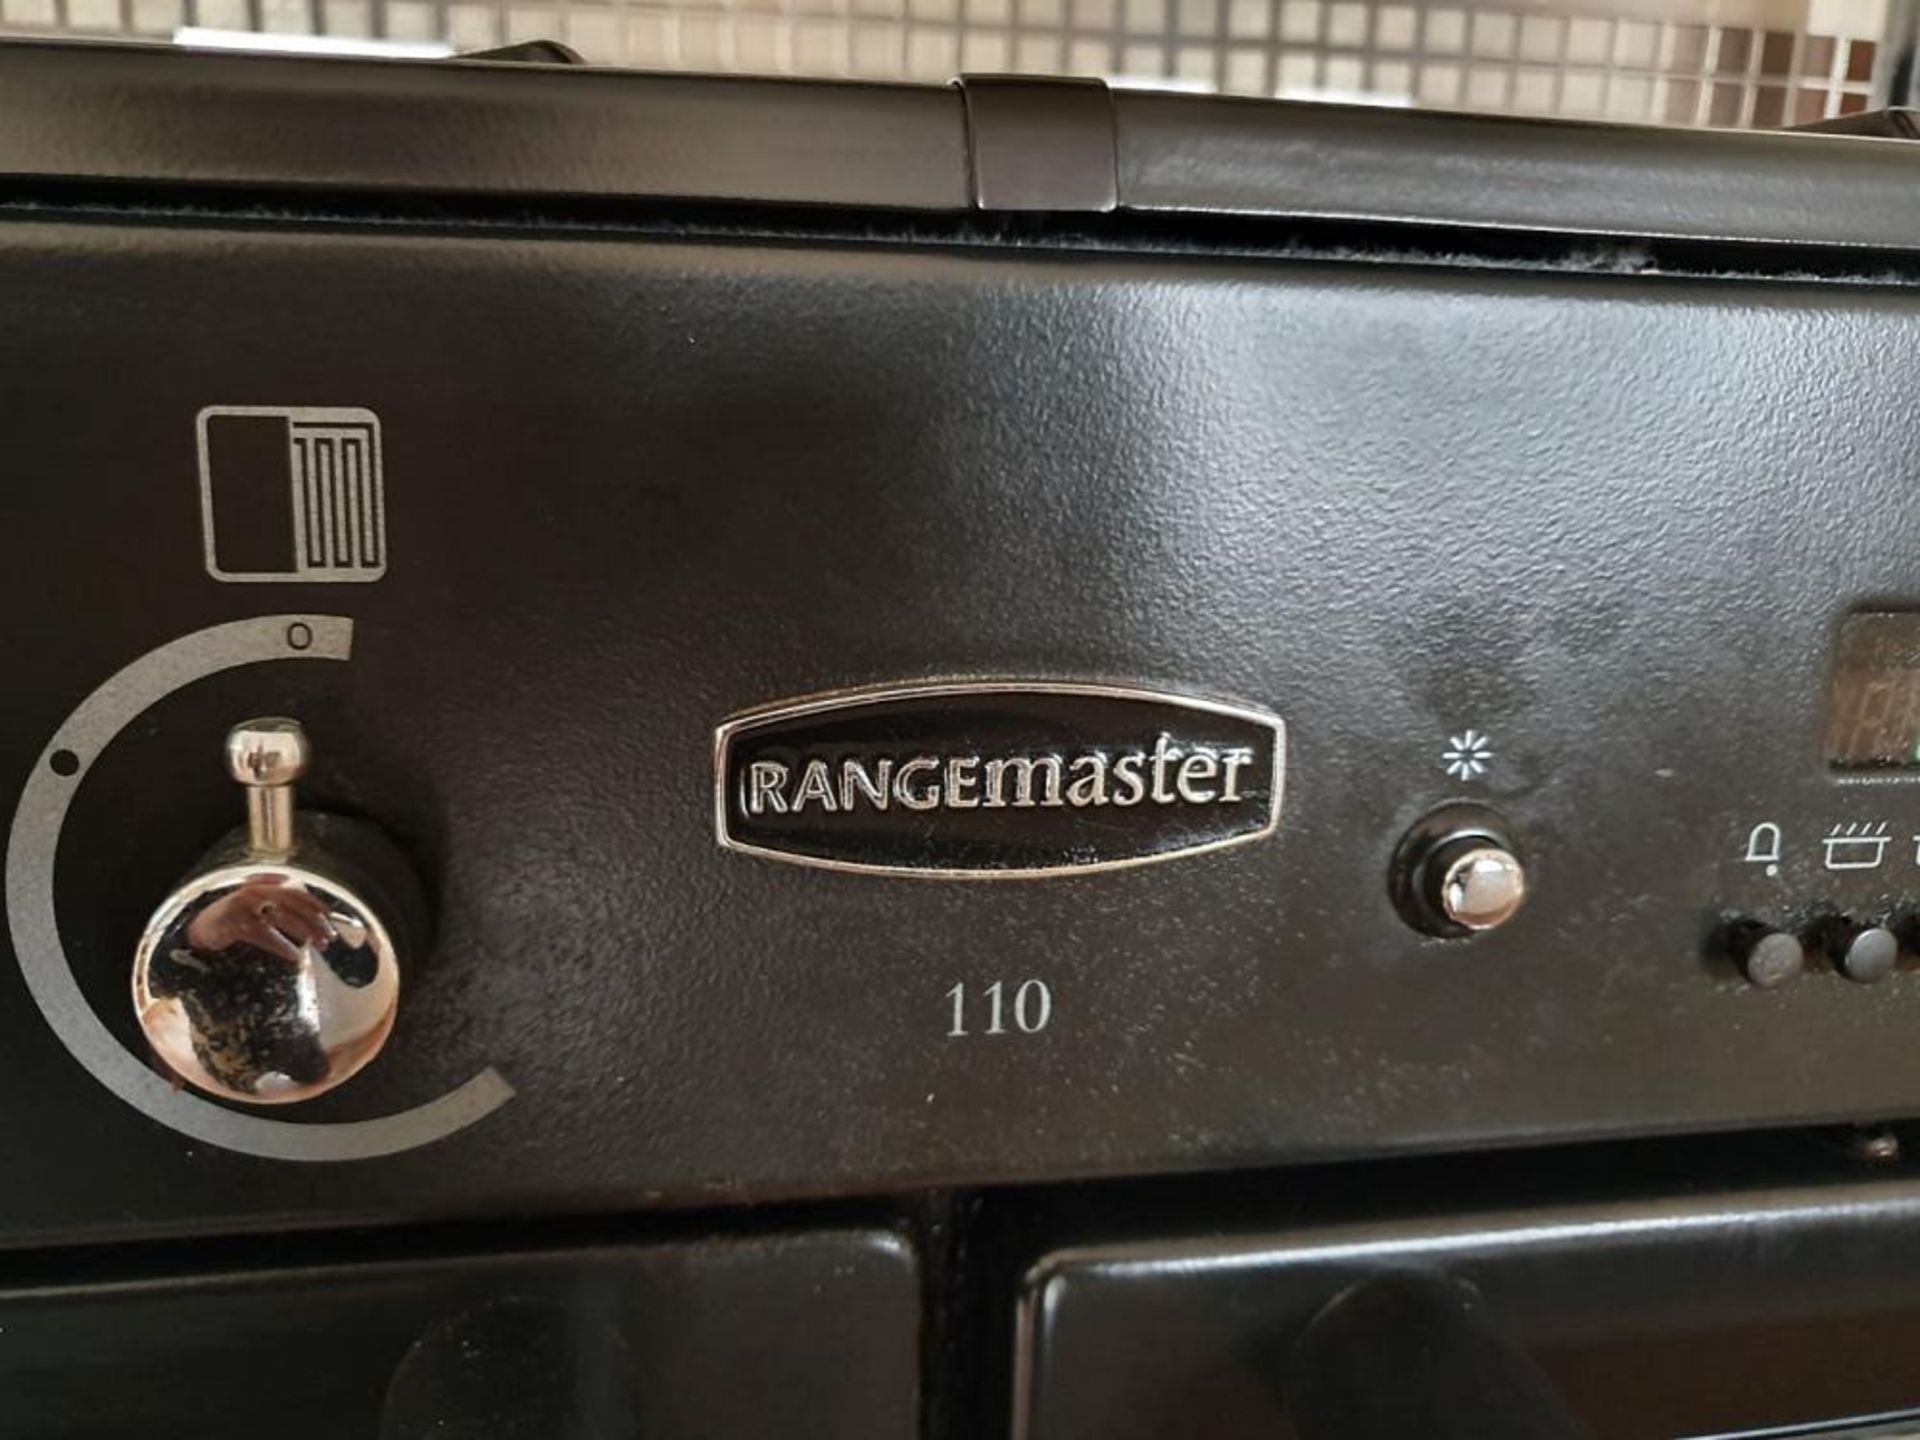 1 x Rangemaster 110cm 6-Burner Dual Fuel Cooker In Black And Brushed Steel - Used In Very Good, Clea - Image 10 of 11